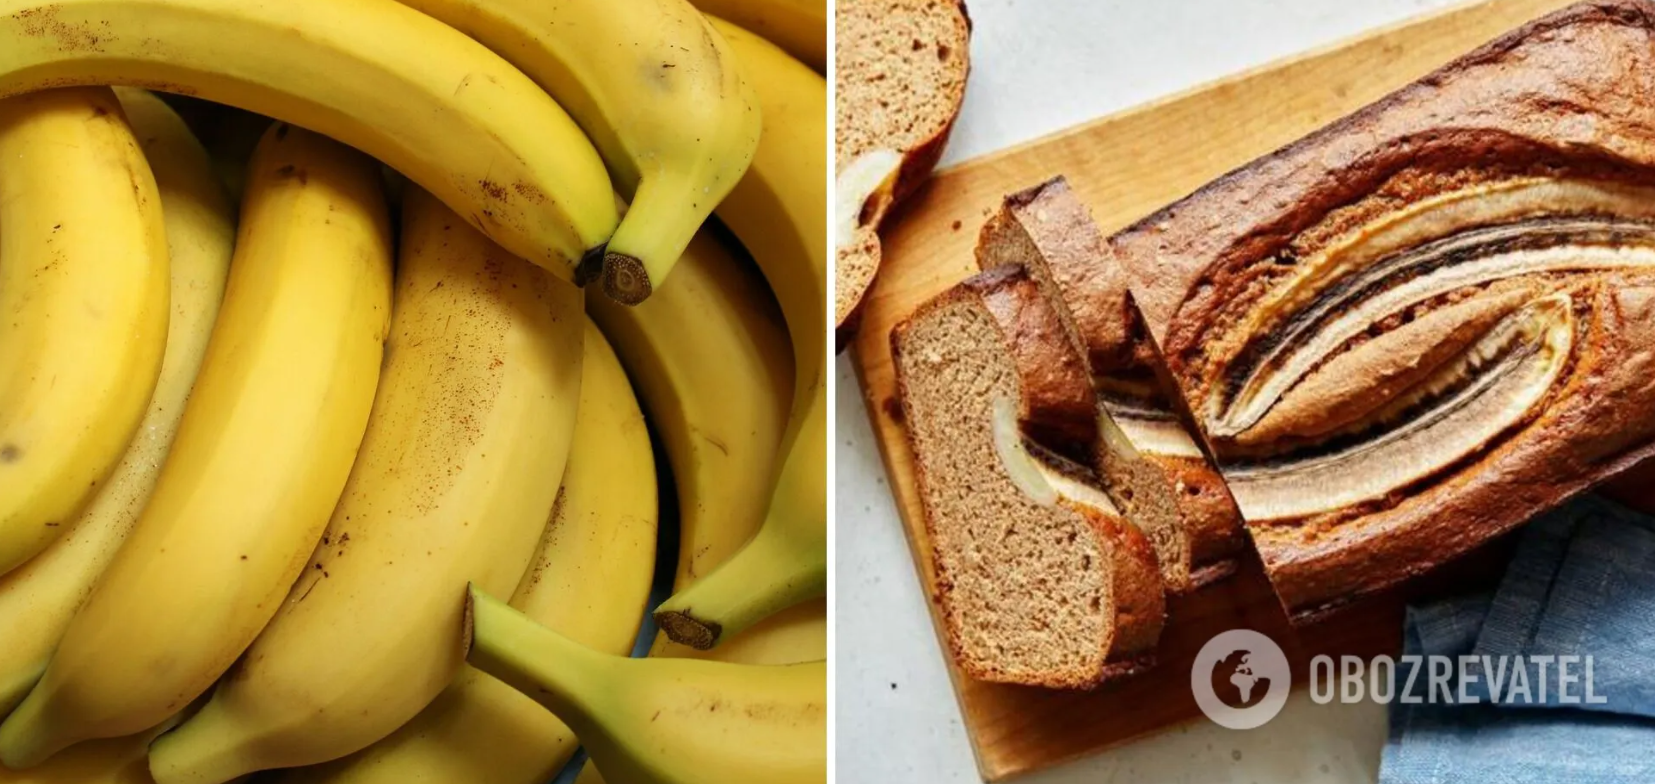 Banana bread with nuts